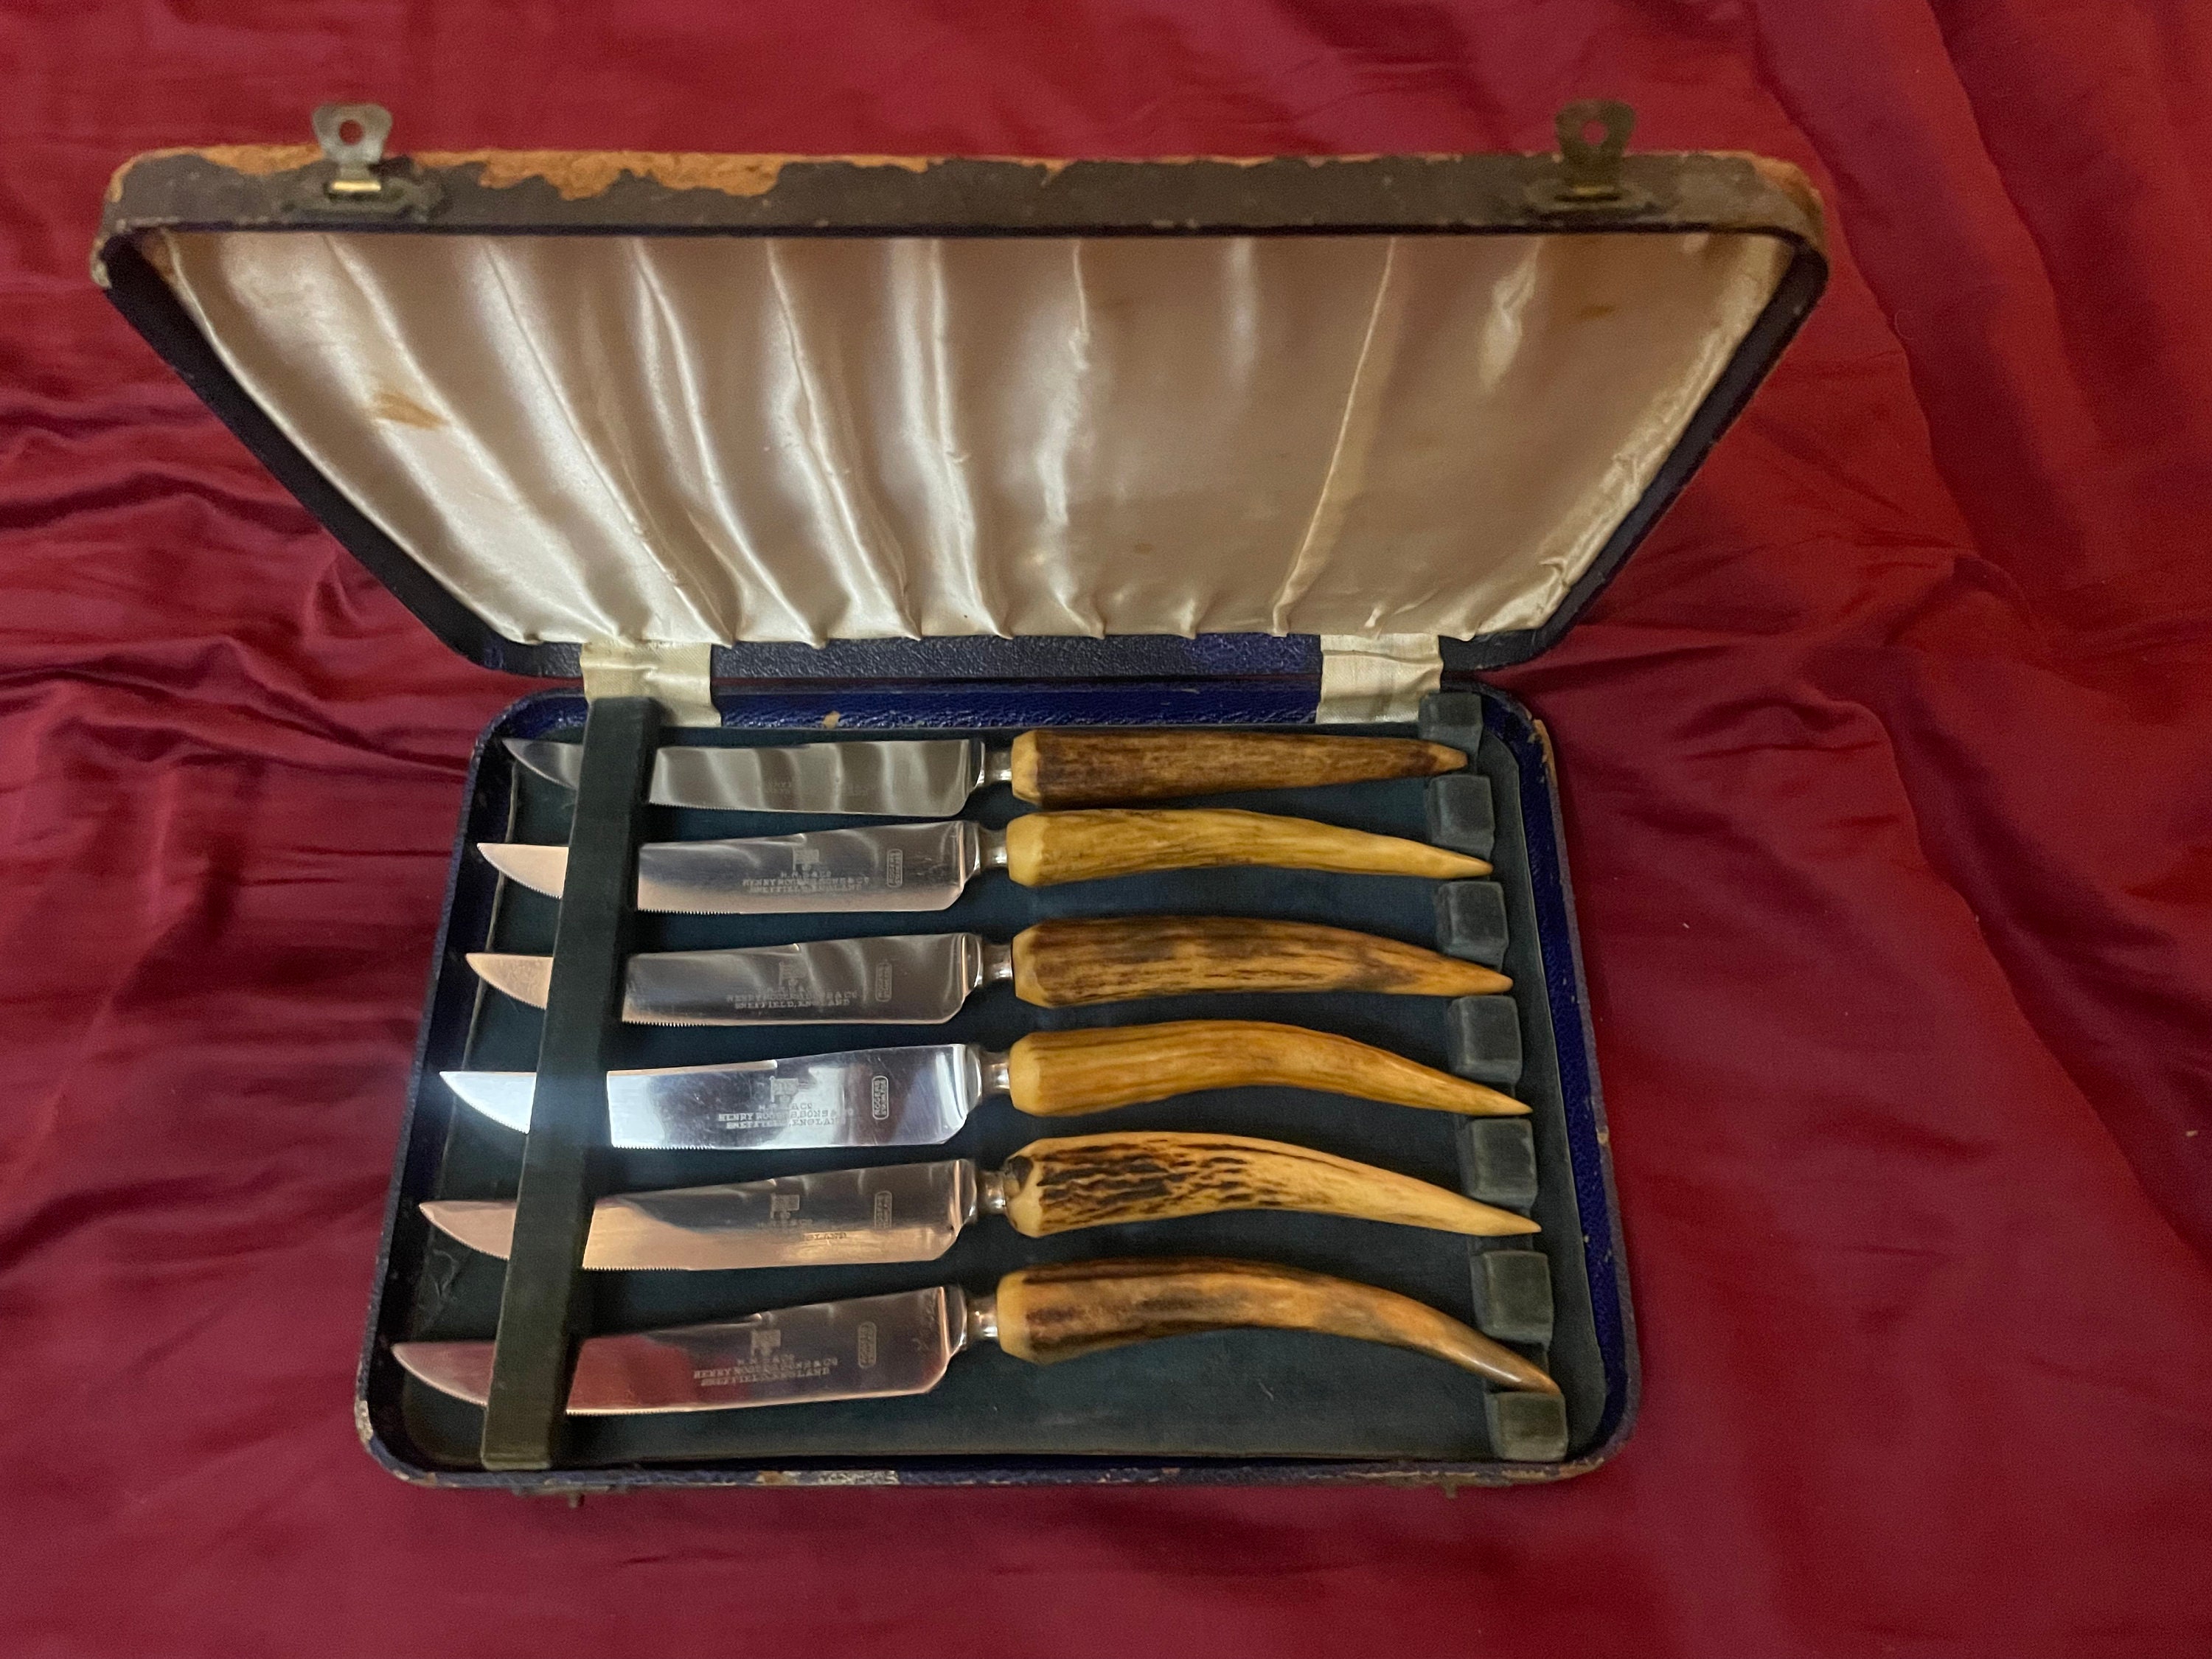 Vintage German Steak Knives Set (c.1960s) – Rush Creek Vintage